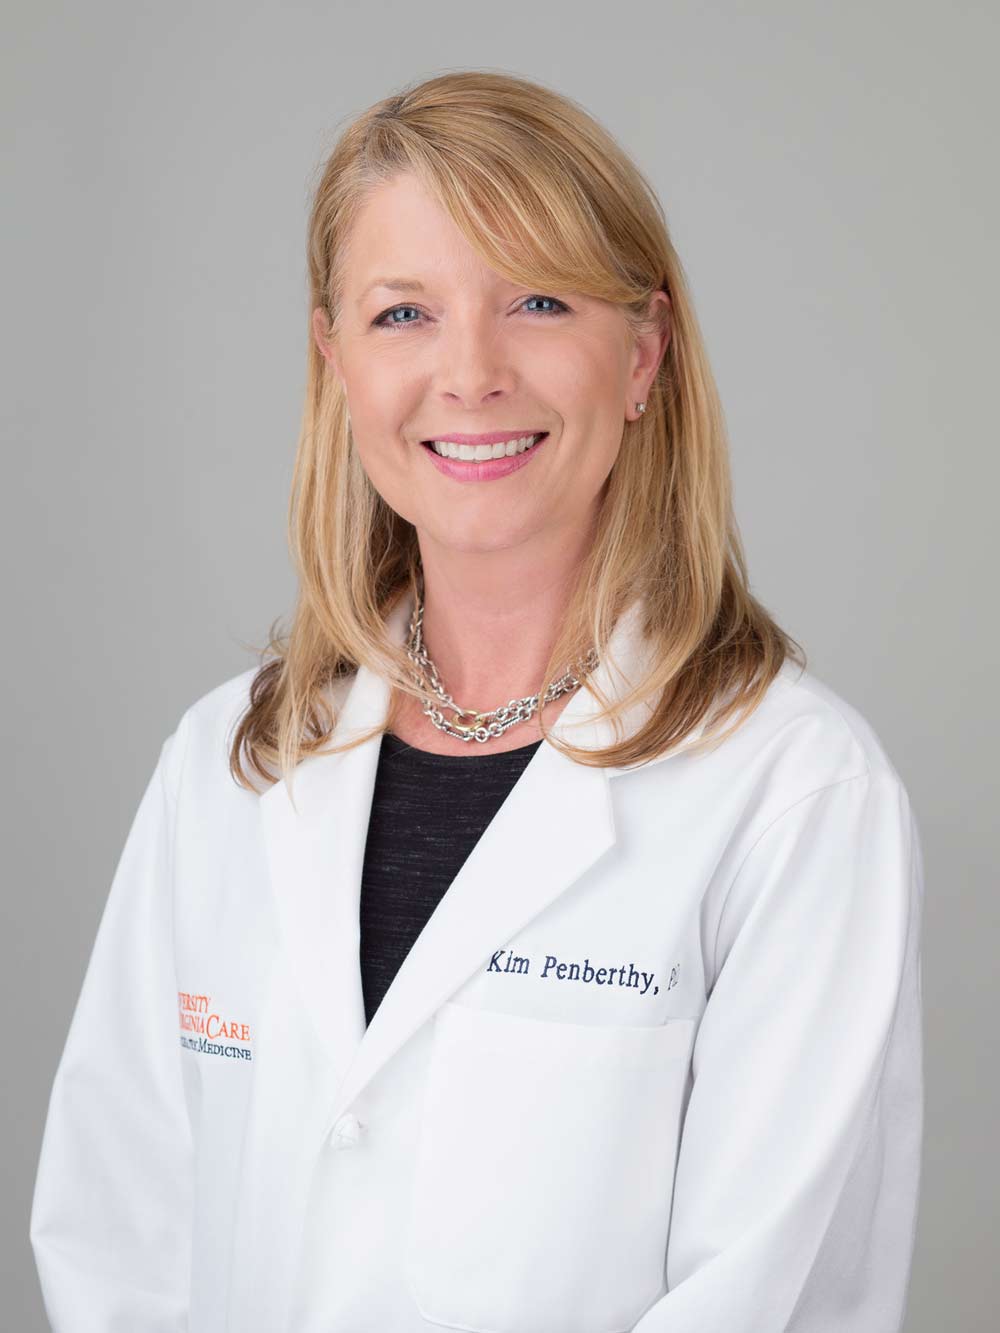 UVA Health’s Dr. Jennifer Kim Penberthy